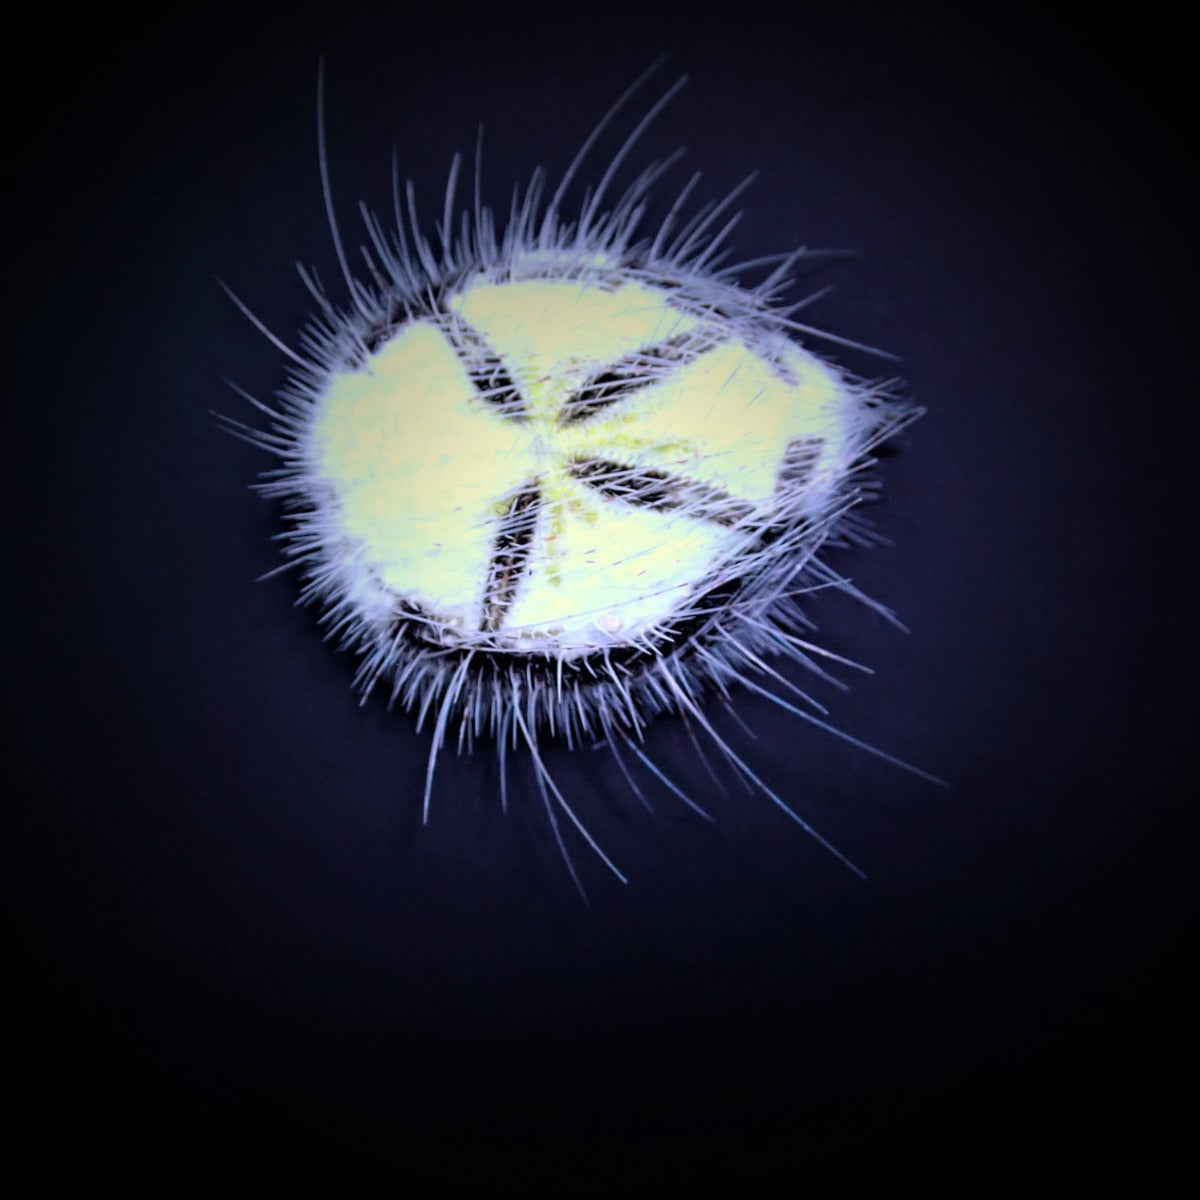 Maretia planulata - Tiny Maretia Heart Urchin